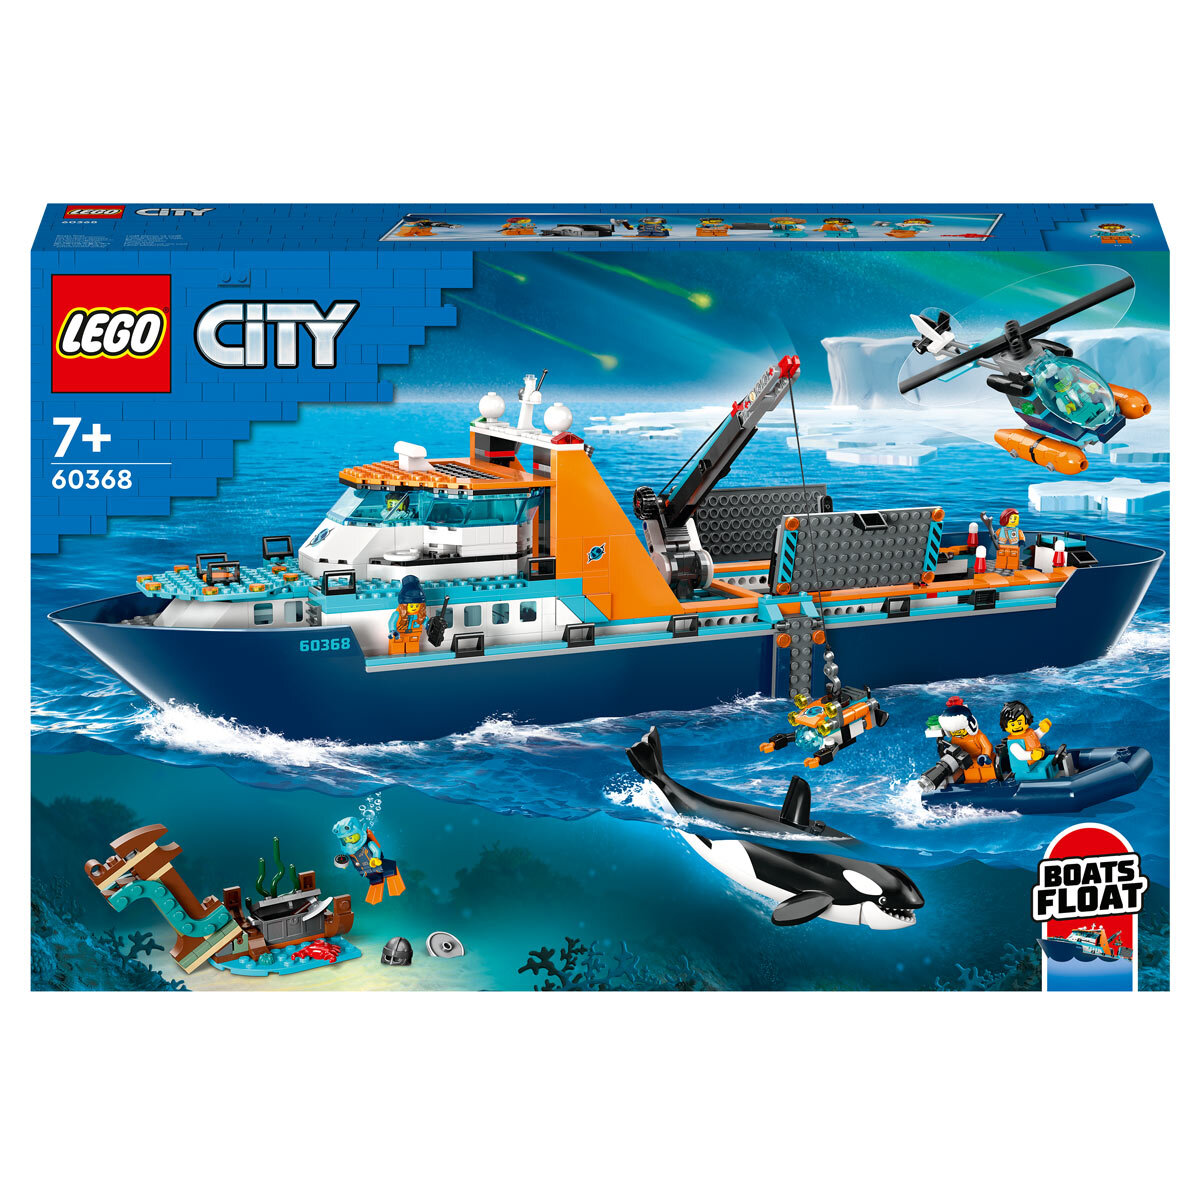 Buy LEGO City Artic Explorer Ship Box Image at Costco.co.uk